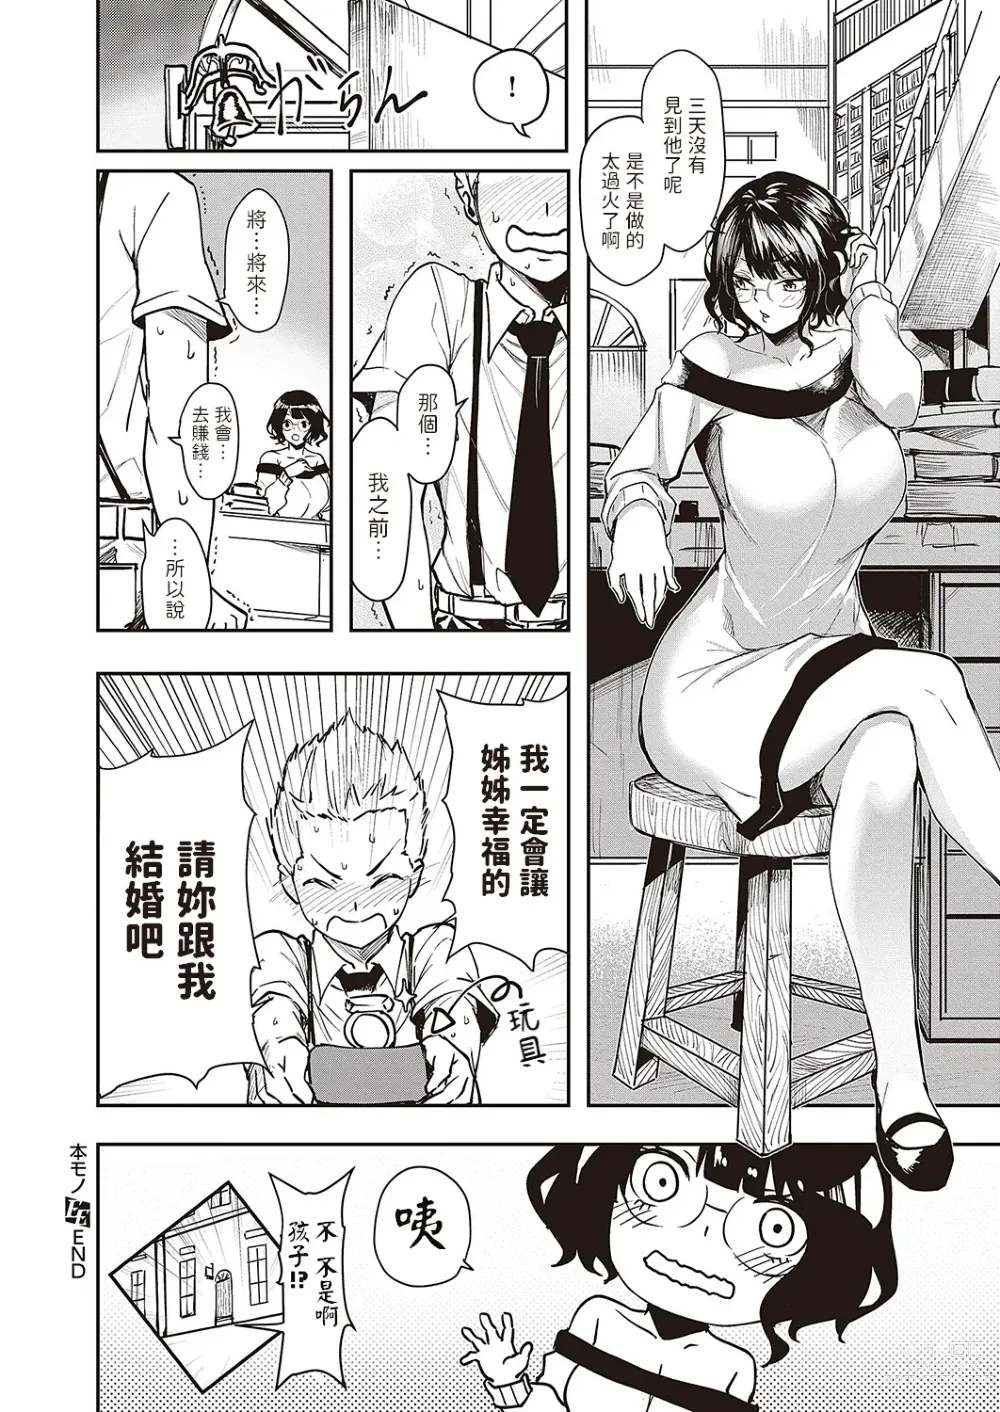 Page 20 of manga Honmono